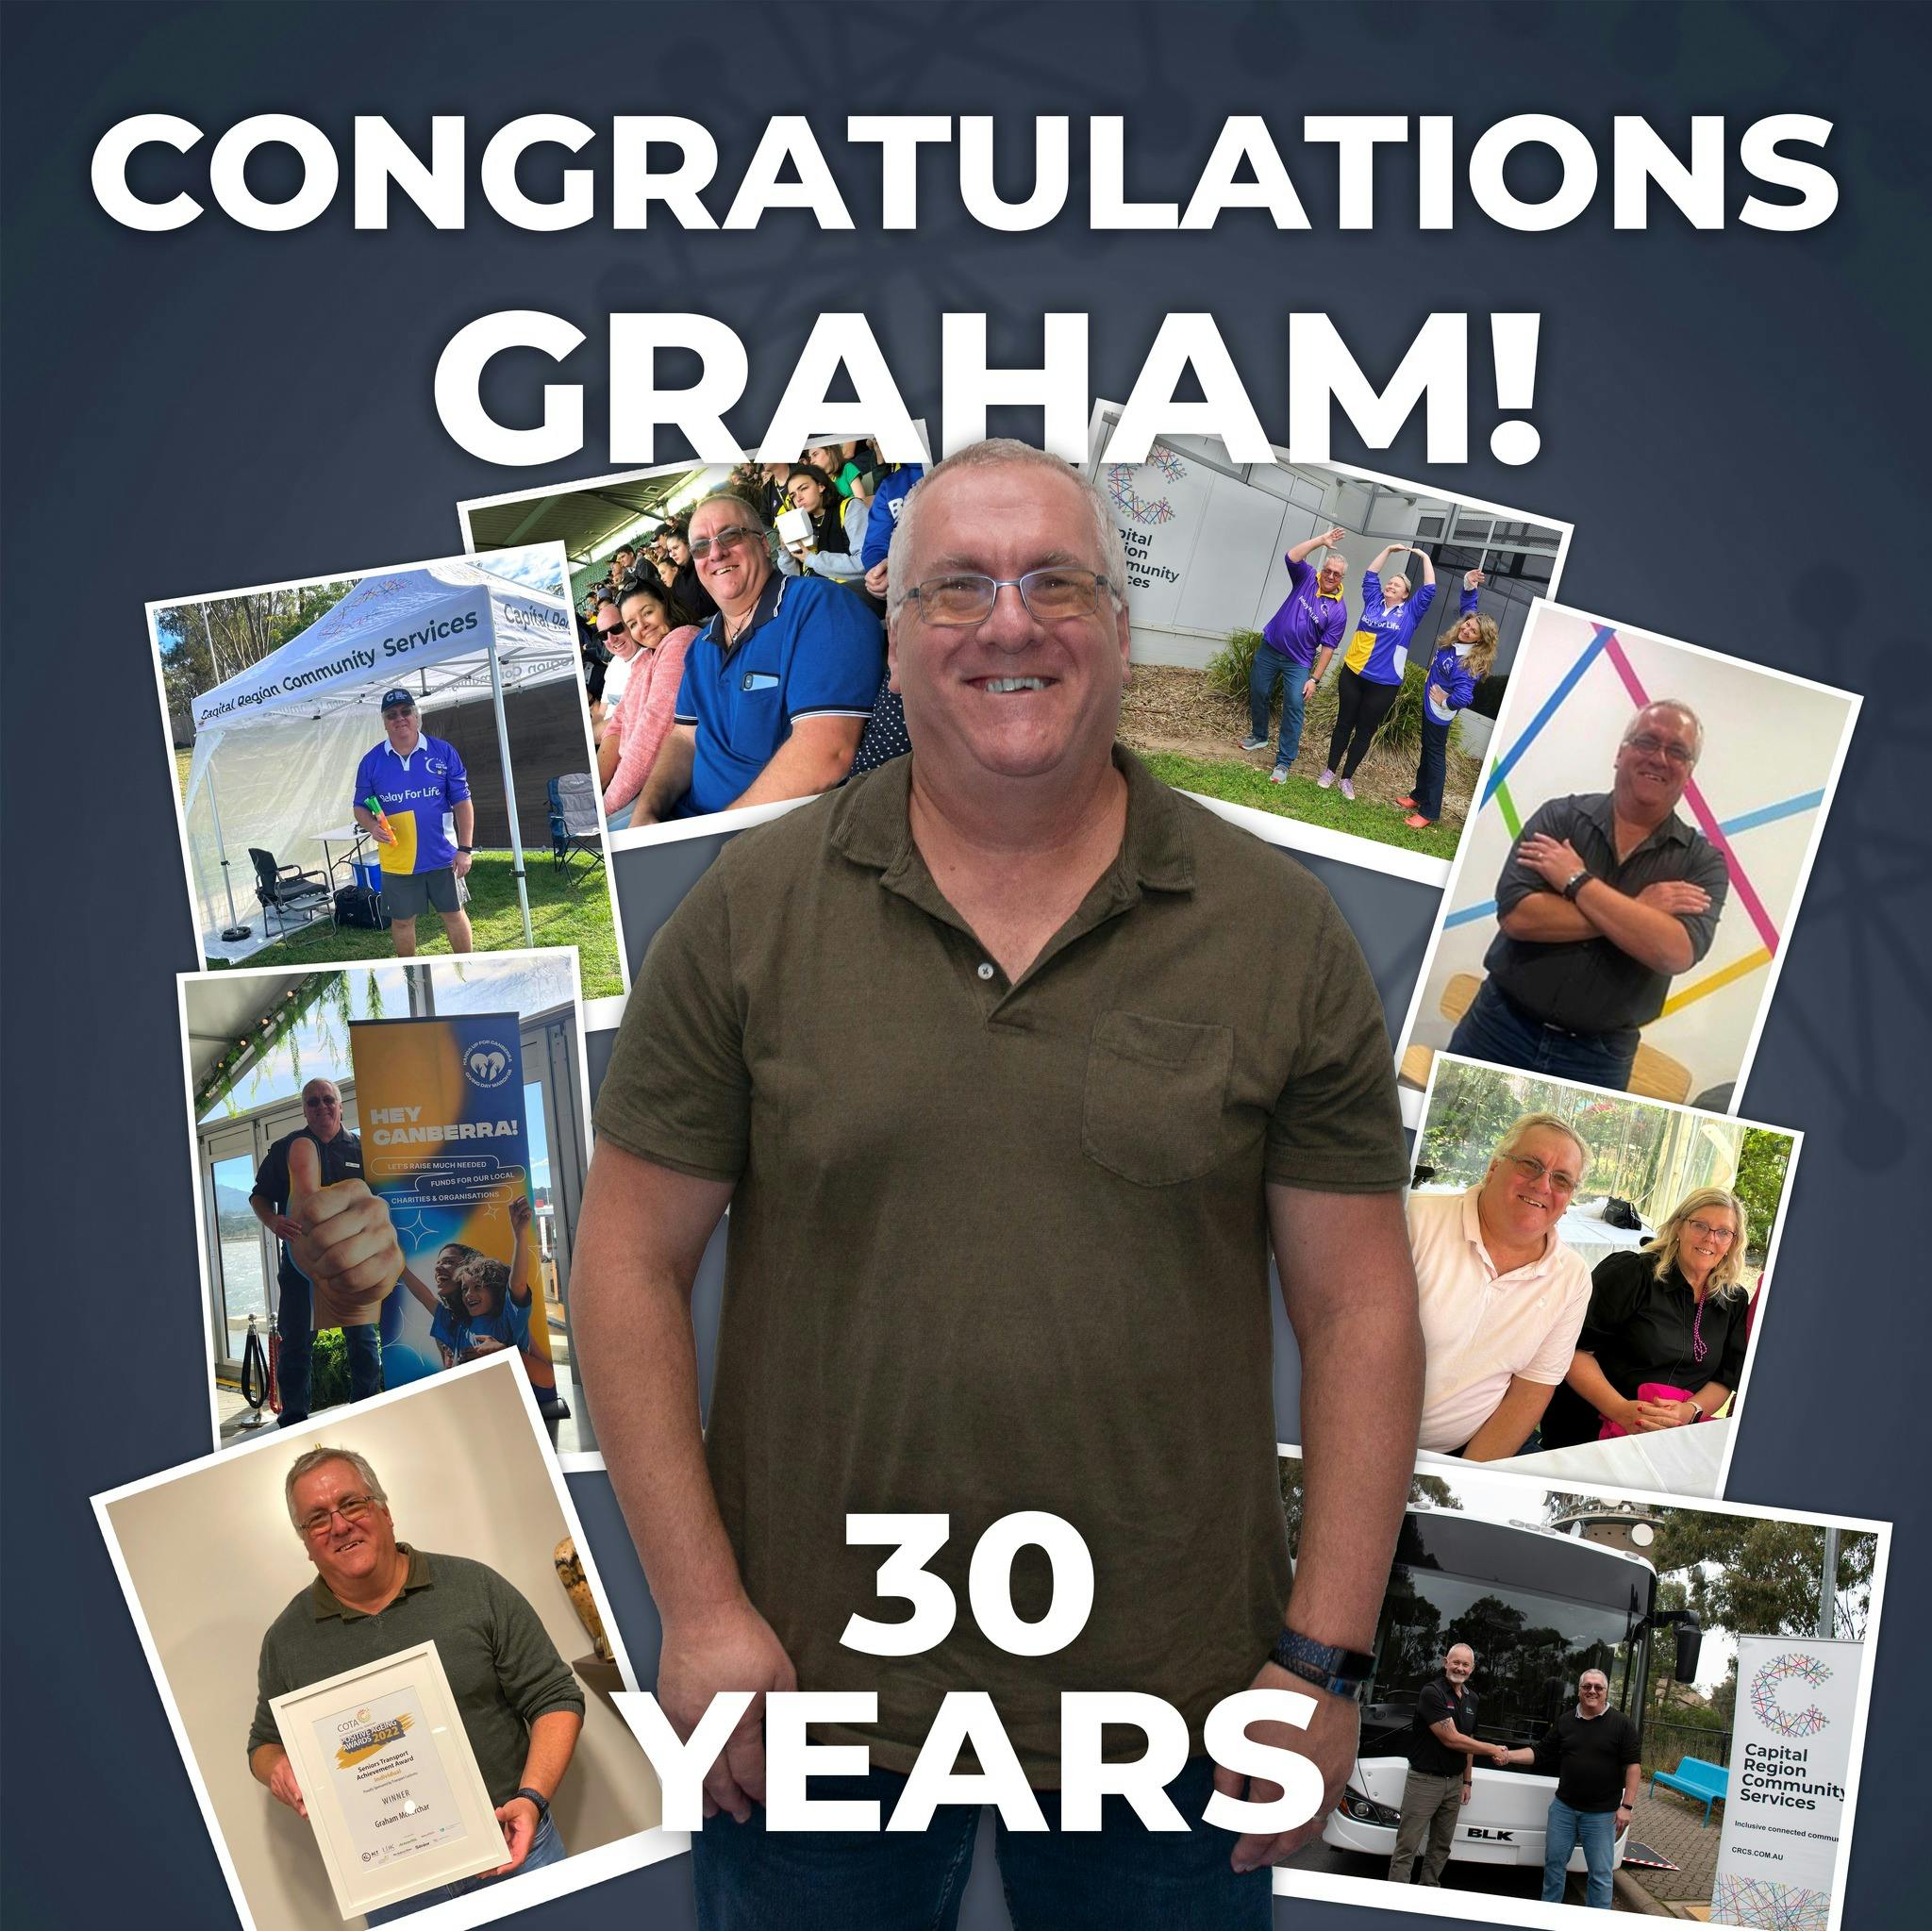 Congratulations Graham on 30 years at CRCS!